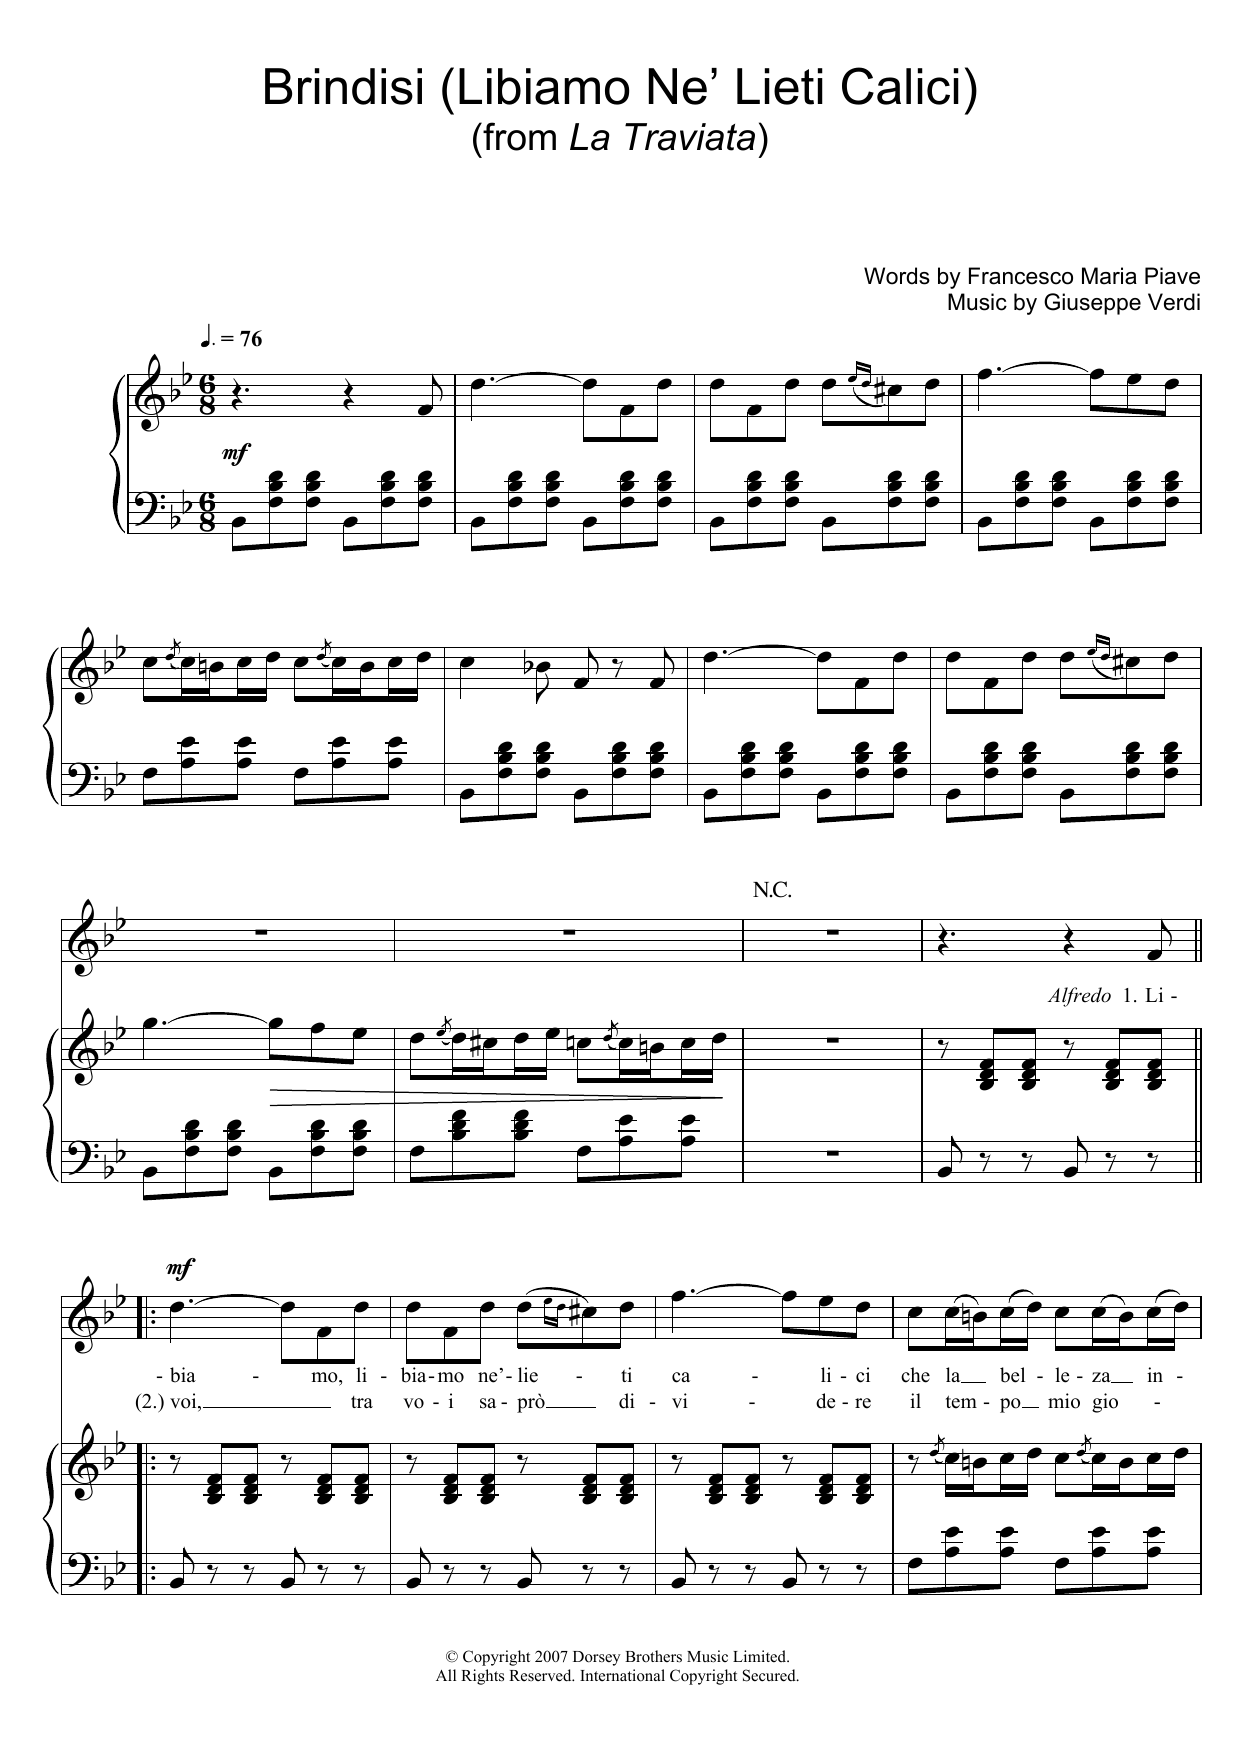 Luciano Pavarotti Brindisi (Libiamo Ne' Lieti Calici) (from La Traviata) Sheet Music Notes & Chords for Piano, Vocal & Guitar - Download or Print PDF